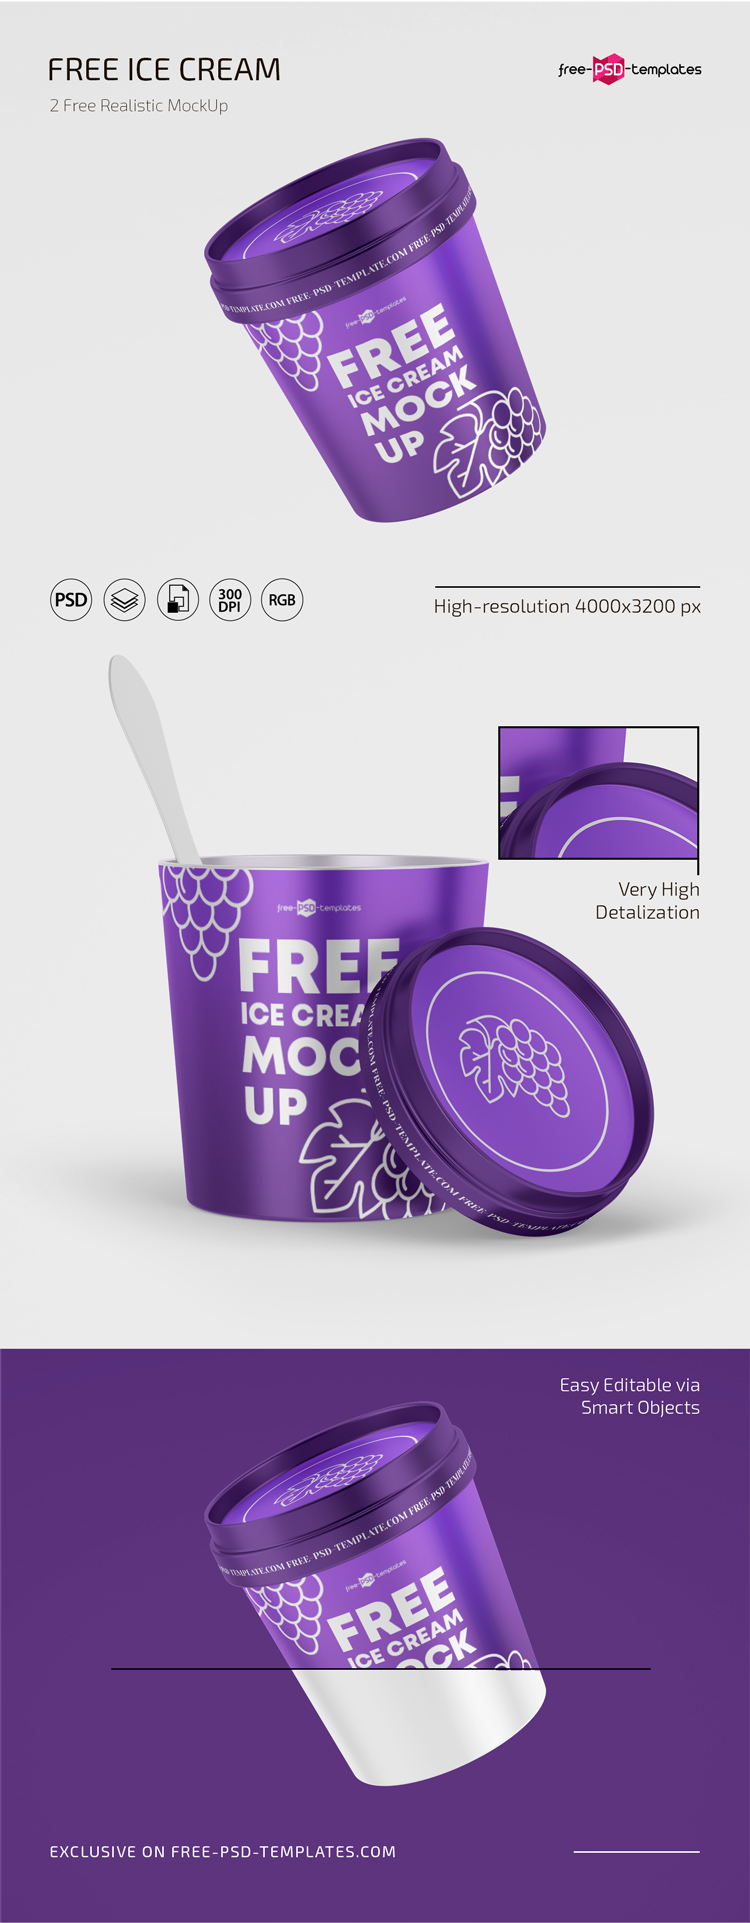 Download Free PSD Ice Cream Plastic Jar Mockup | Free PSD Templates